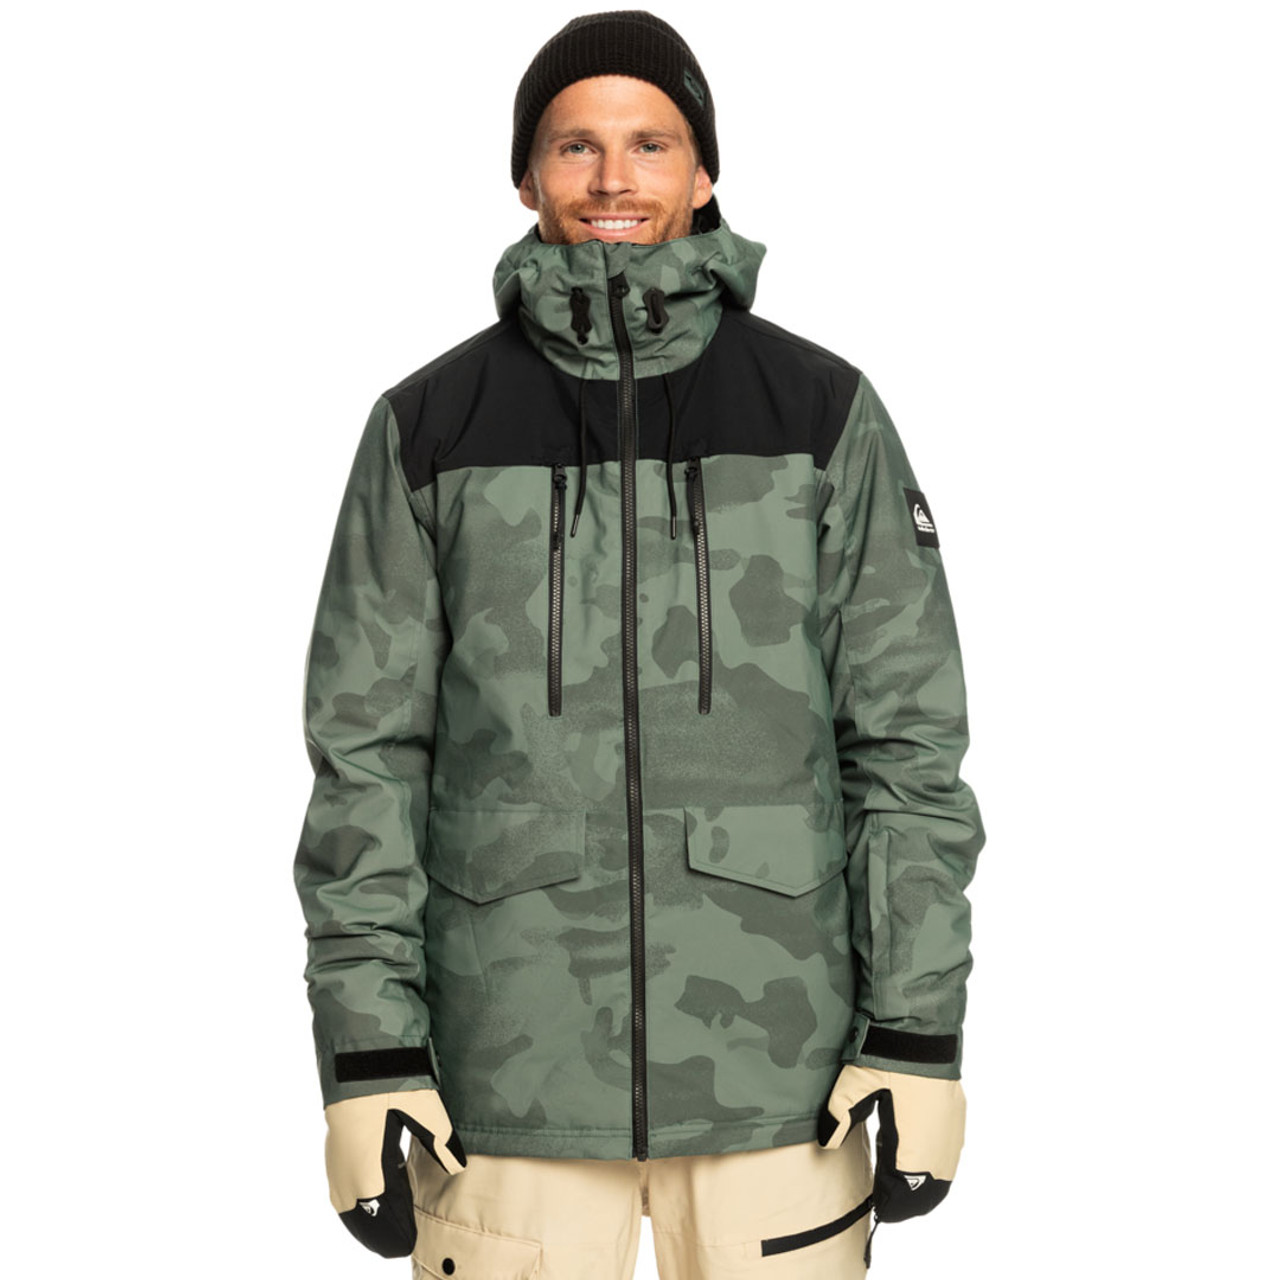 Quiksilver Men's Fairbanks Technical Snow Jacket